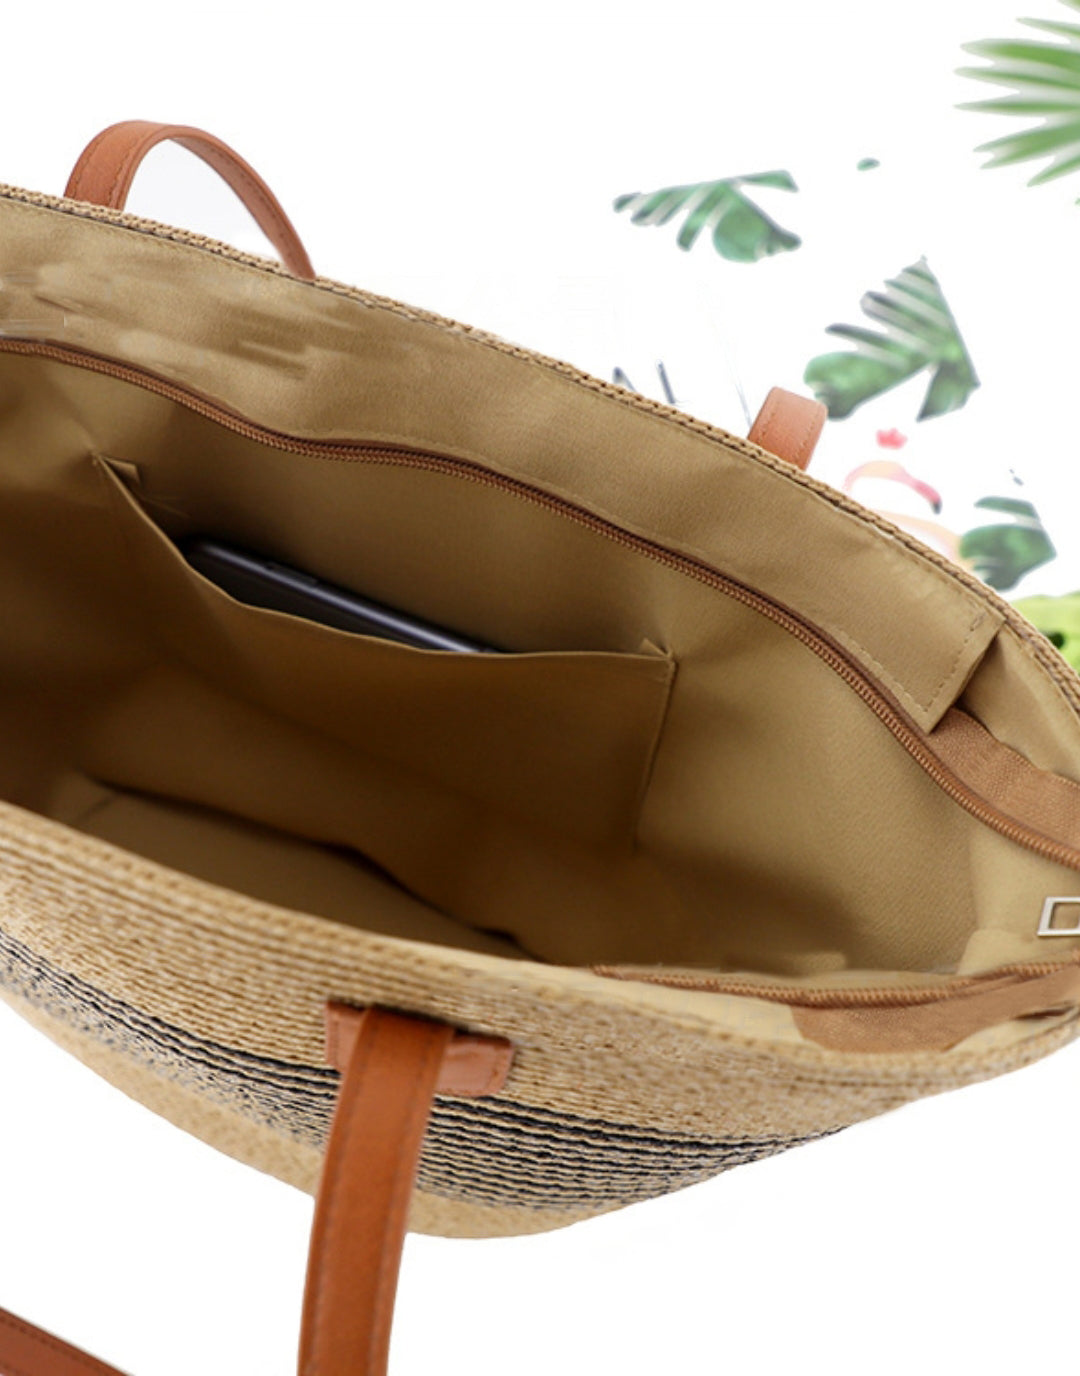 Straw Beach Bags Tote Bag&Summer Handwoven Shoulder Bags